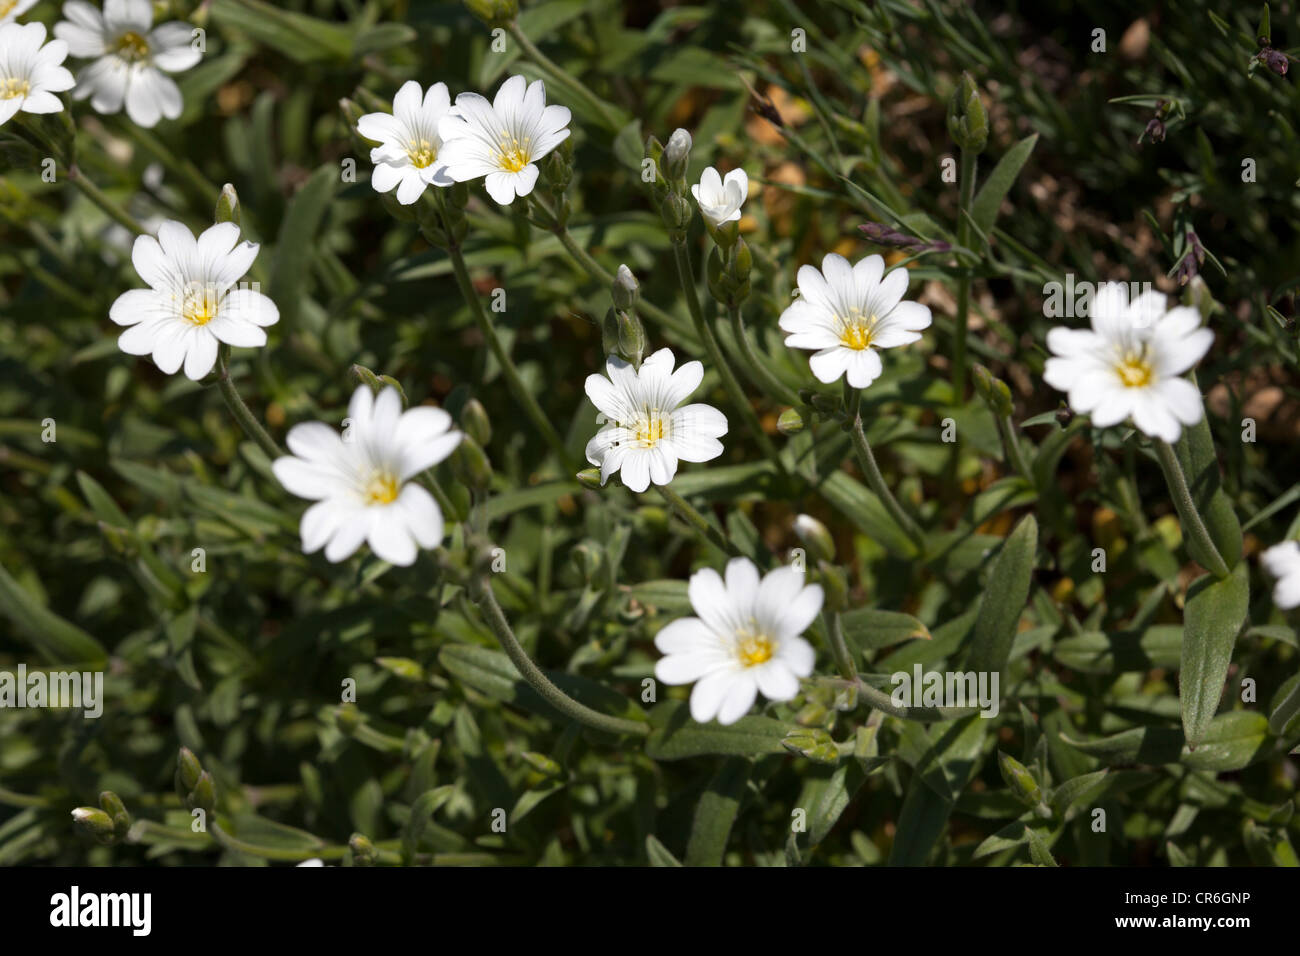 Gibraltar Chickweed, Cerastium repens (Cerastium gibraltaricum) Stock Photo